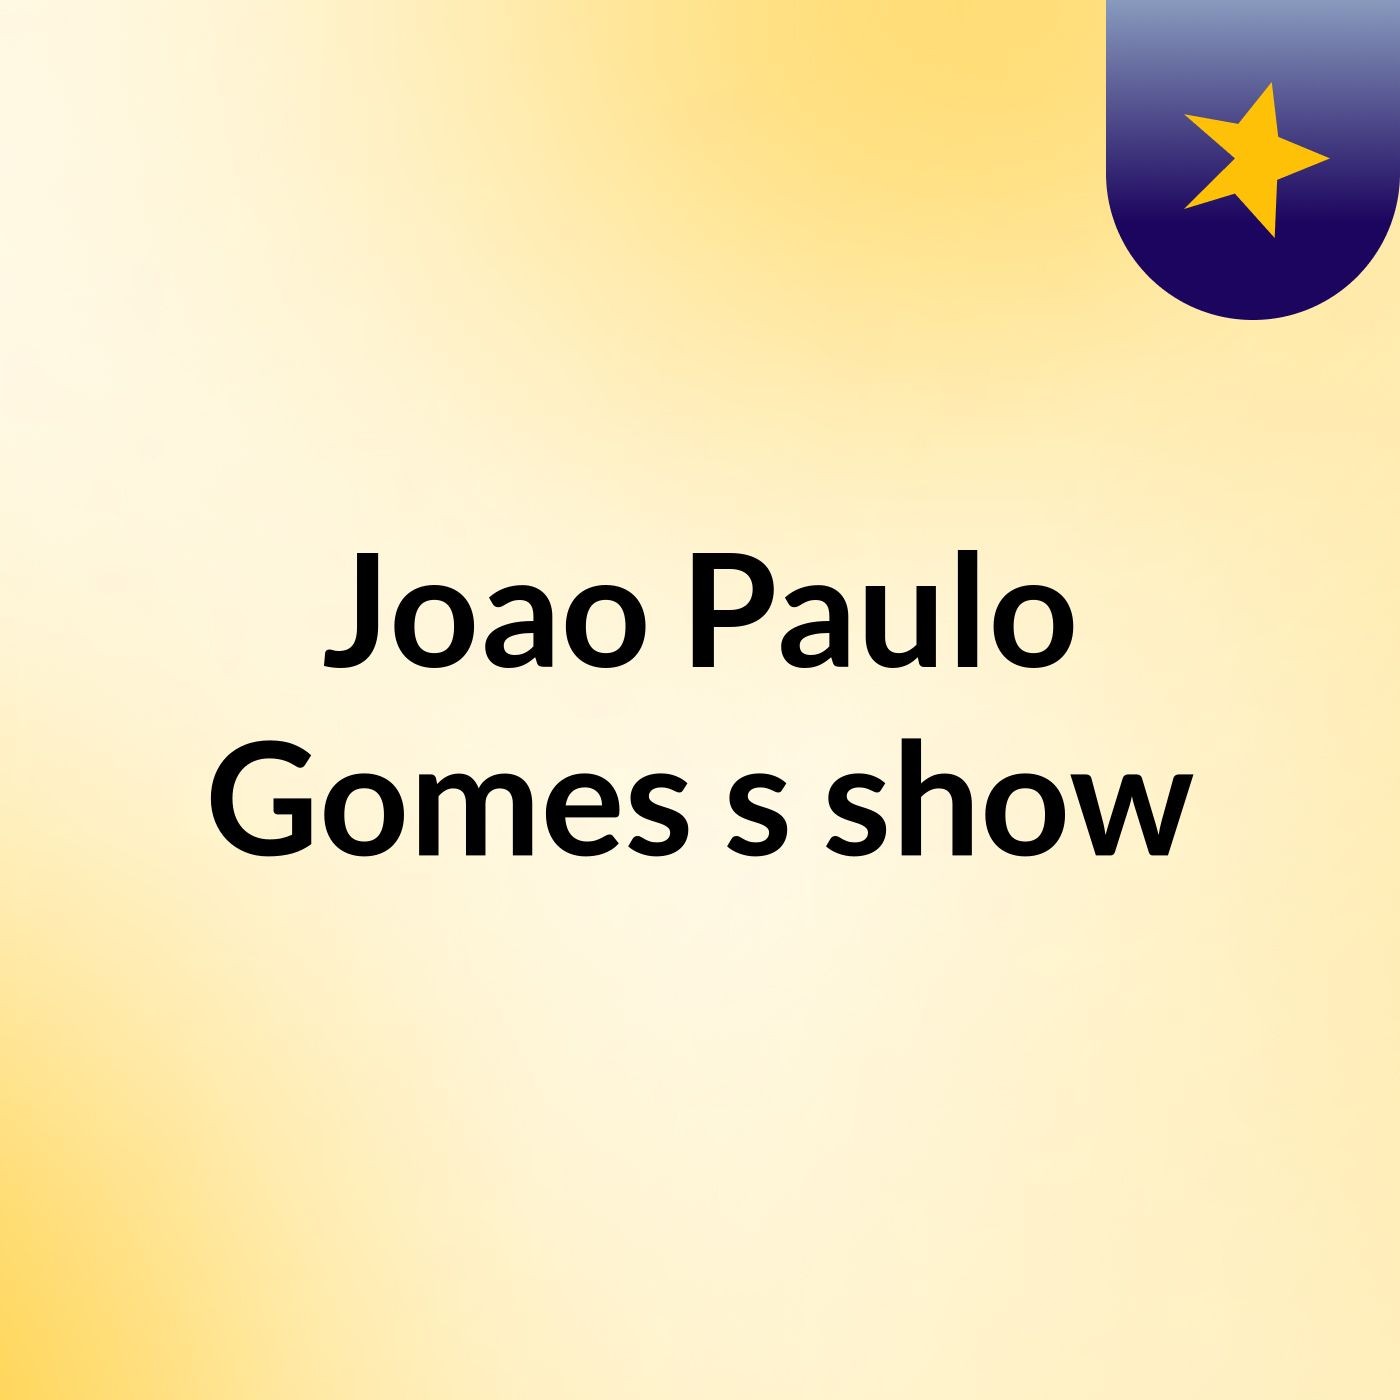 Joao Paulo Gomes's show